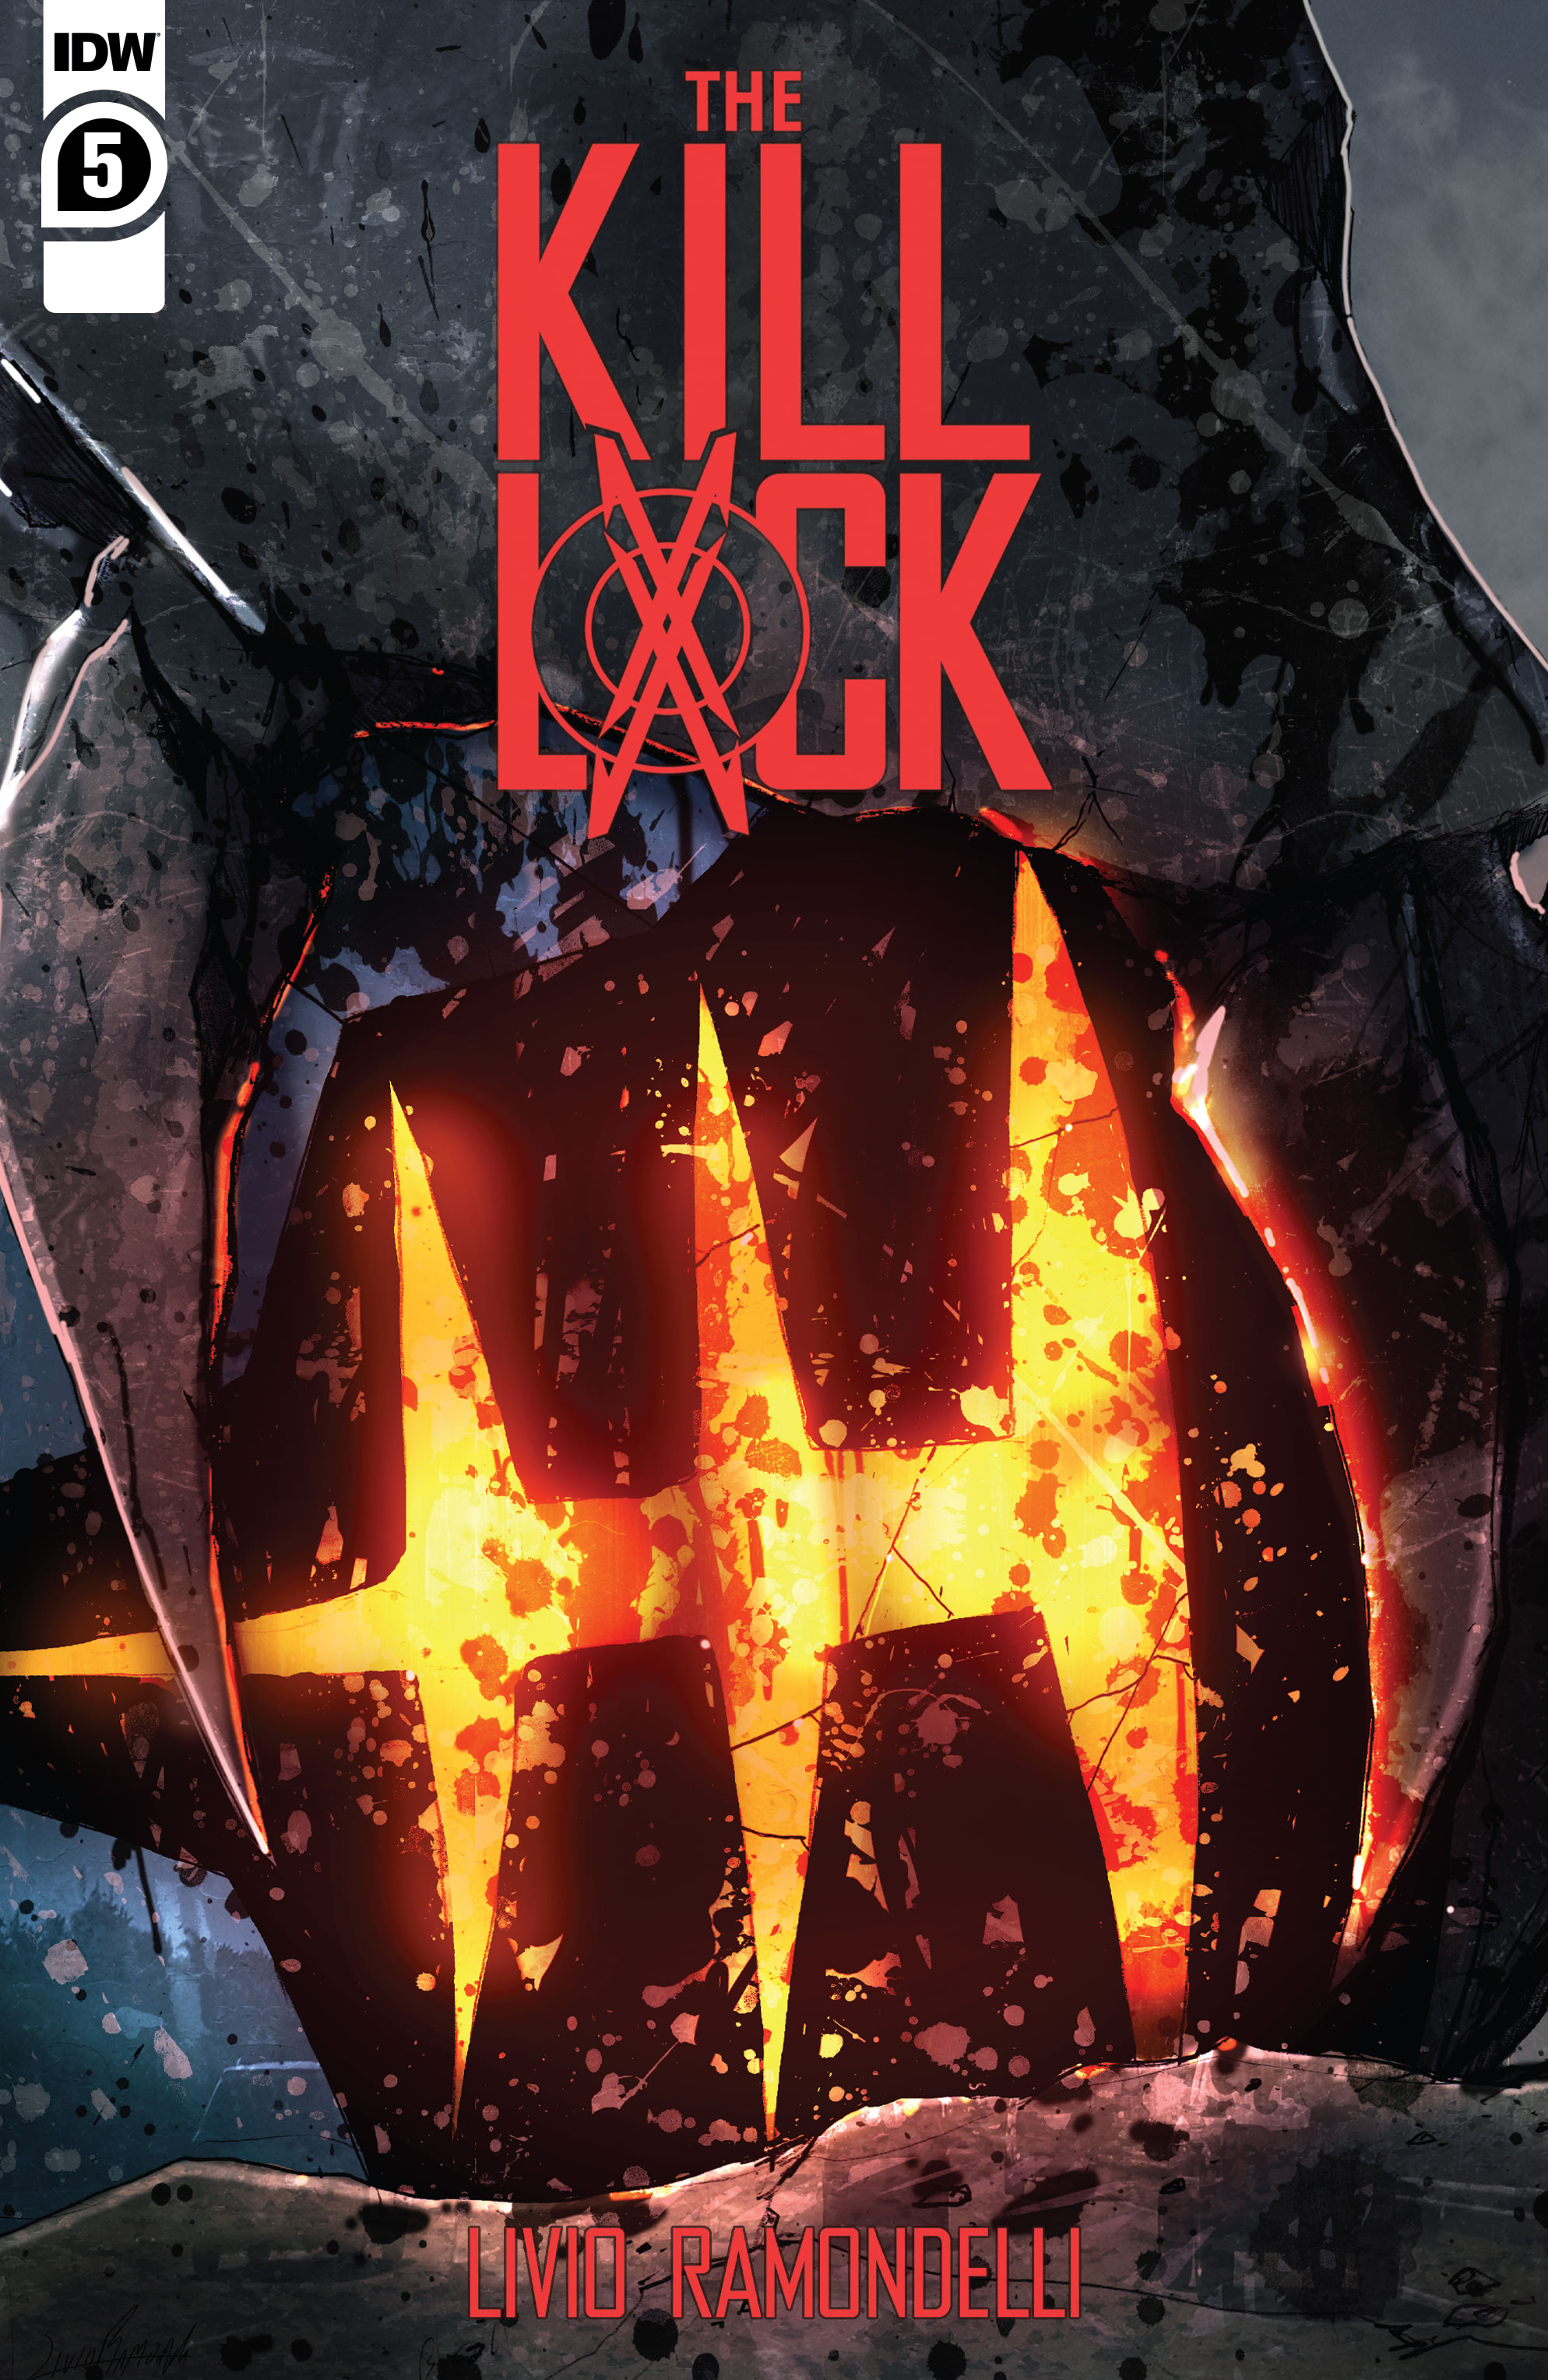 Read online The Kill Lock comic -  Issue #5 - 1